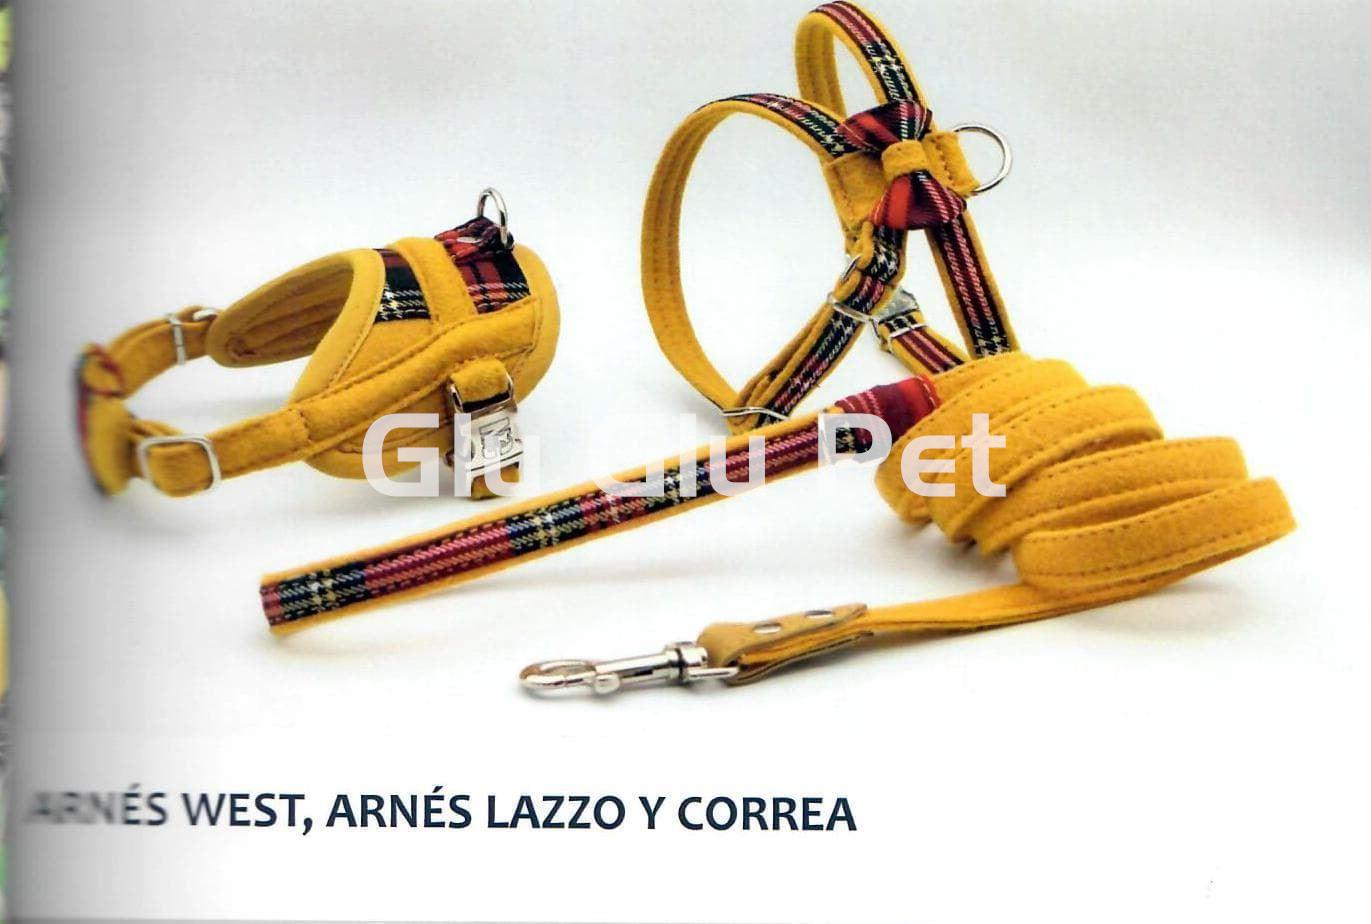 Arlin model harness - Image 1